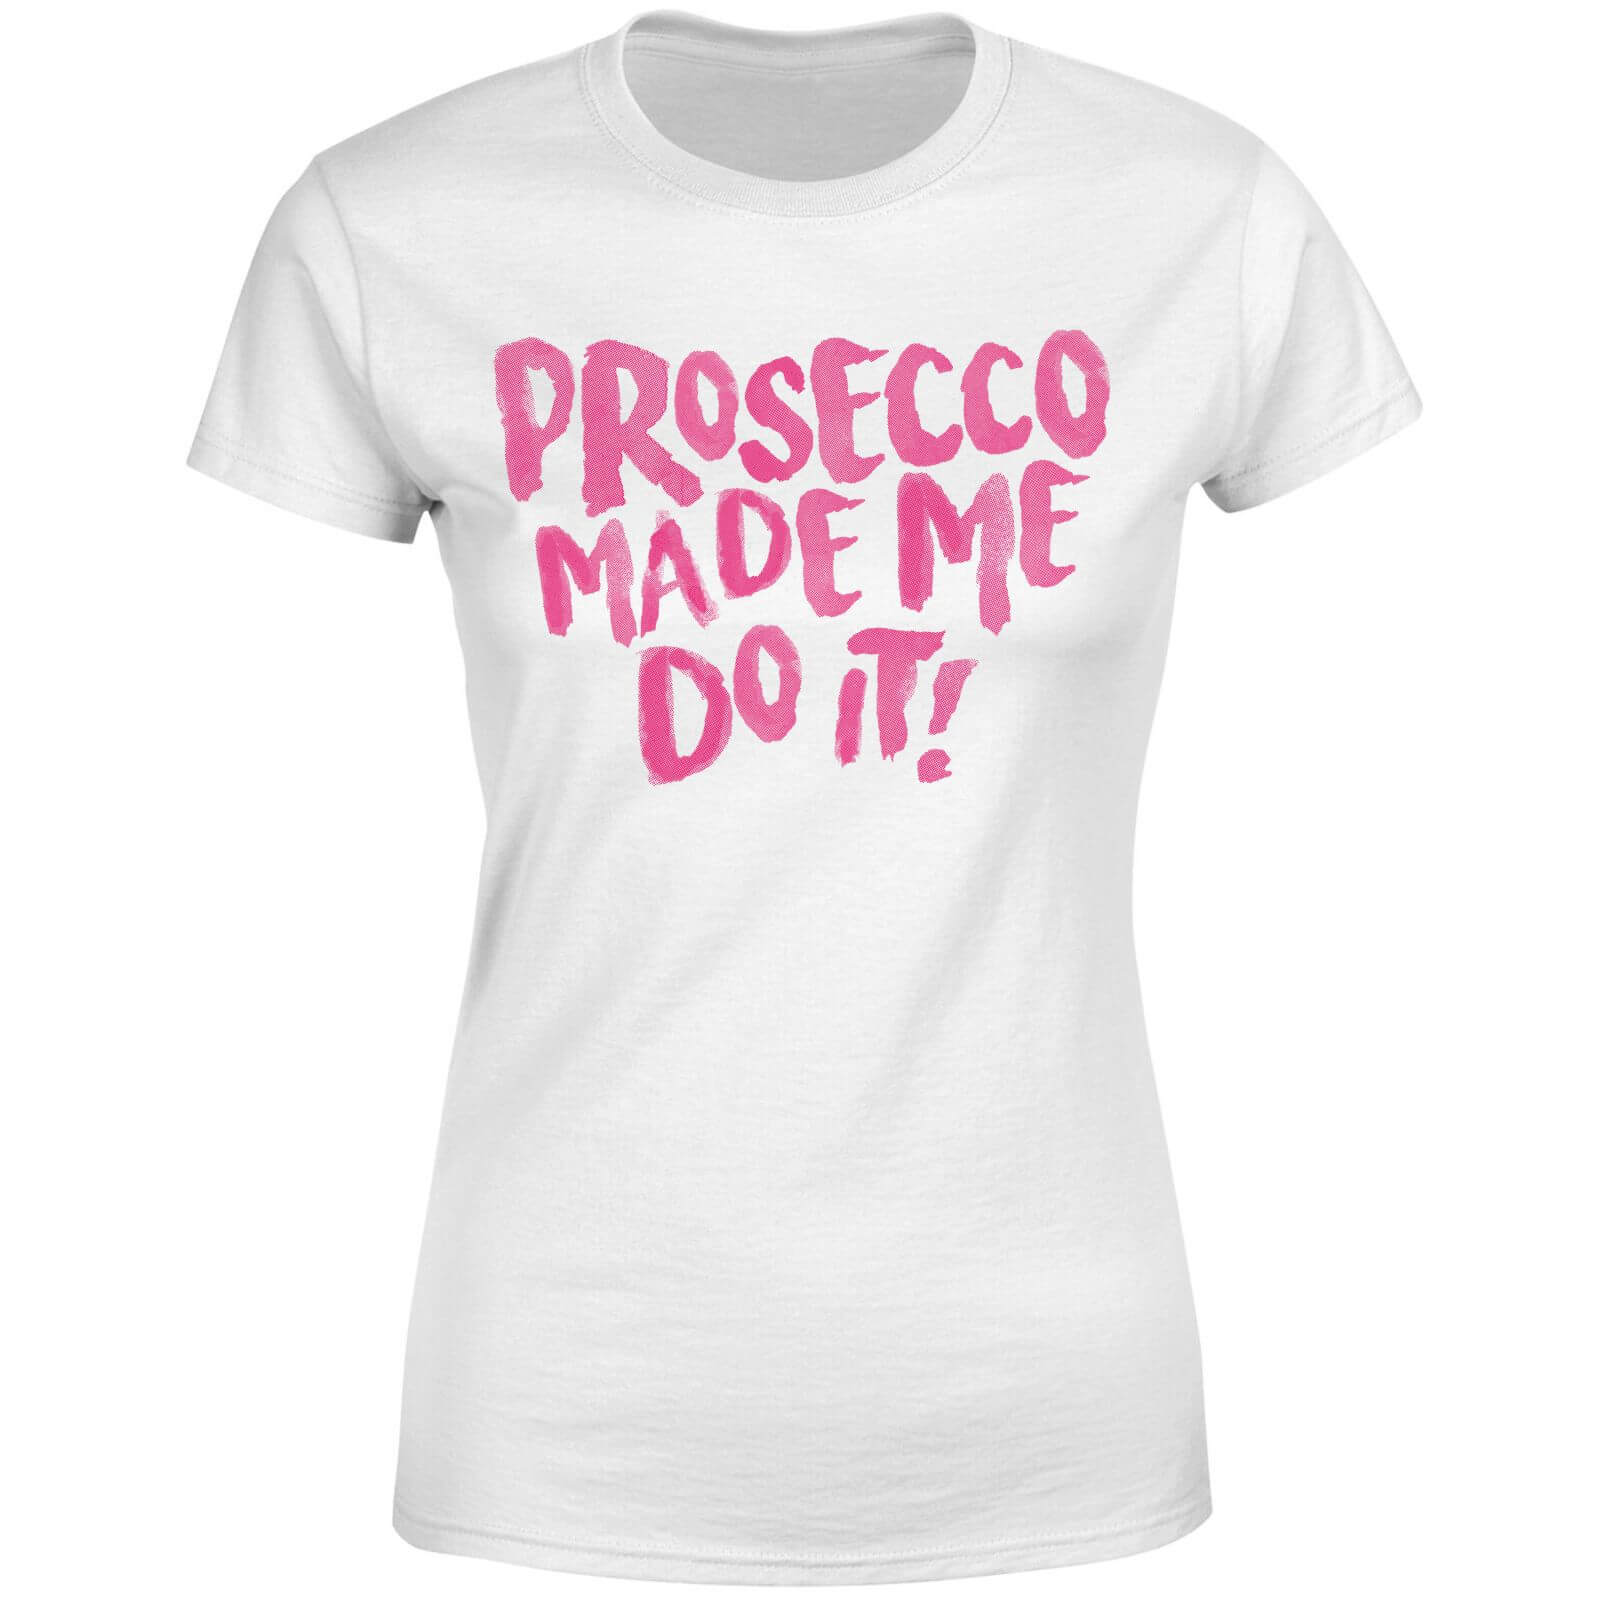 Prosecco Made Me Do it Women's T-Shirt - White - S - White